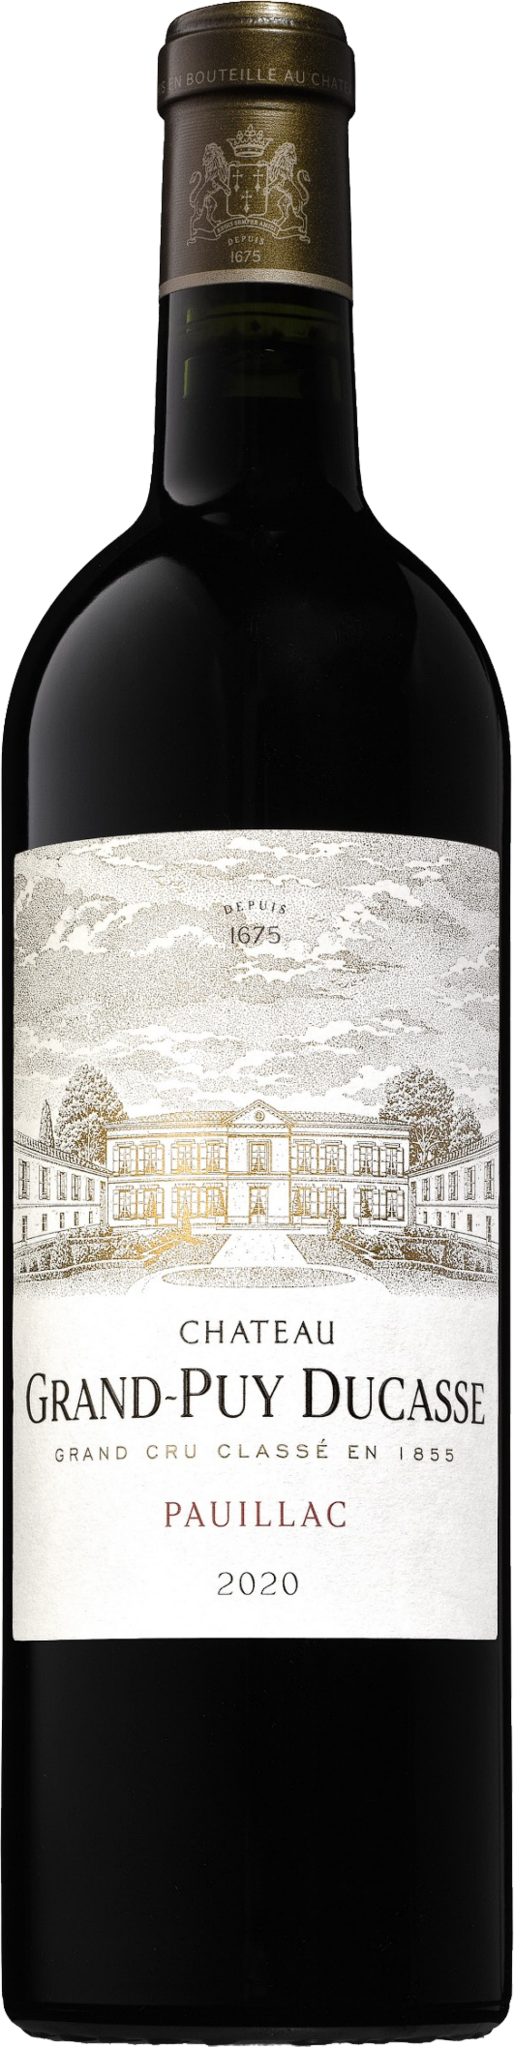 Château Grand-Puy Pauillac, Pauillac bijzondere wijnen voor Ducasse Cru 5e Frankrijk - - prijzen Vin 2020 Bordeaux, Unique - scherpe